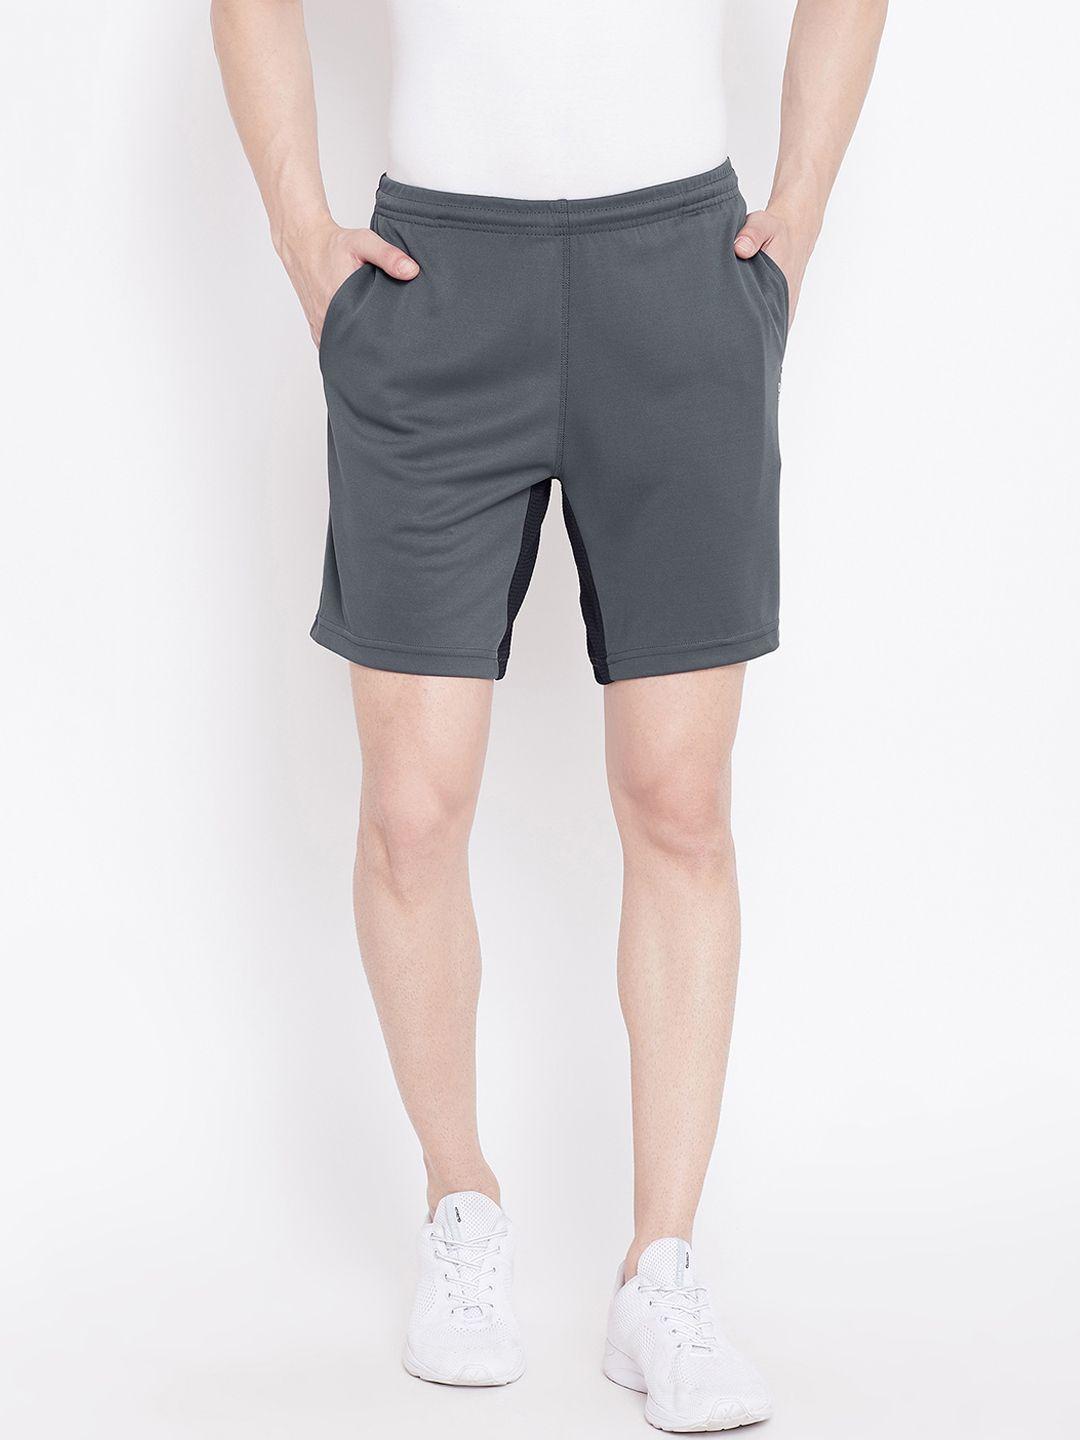 athlisis men grey colourblocked sports shorts